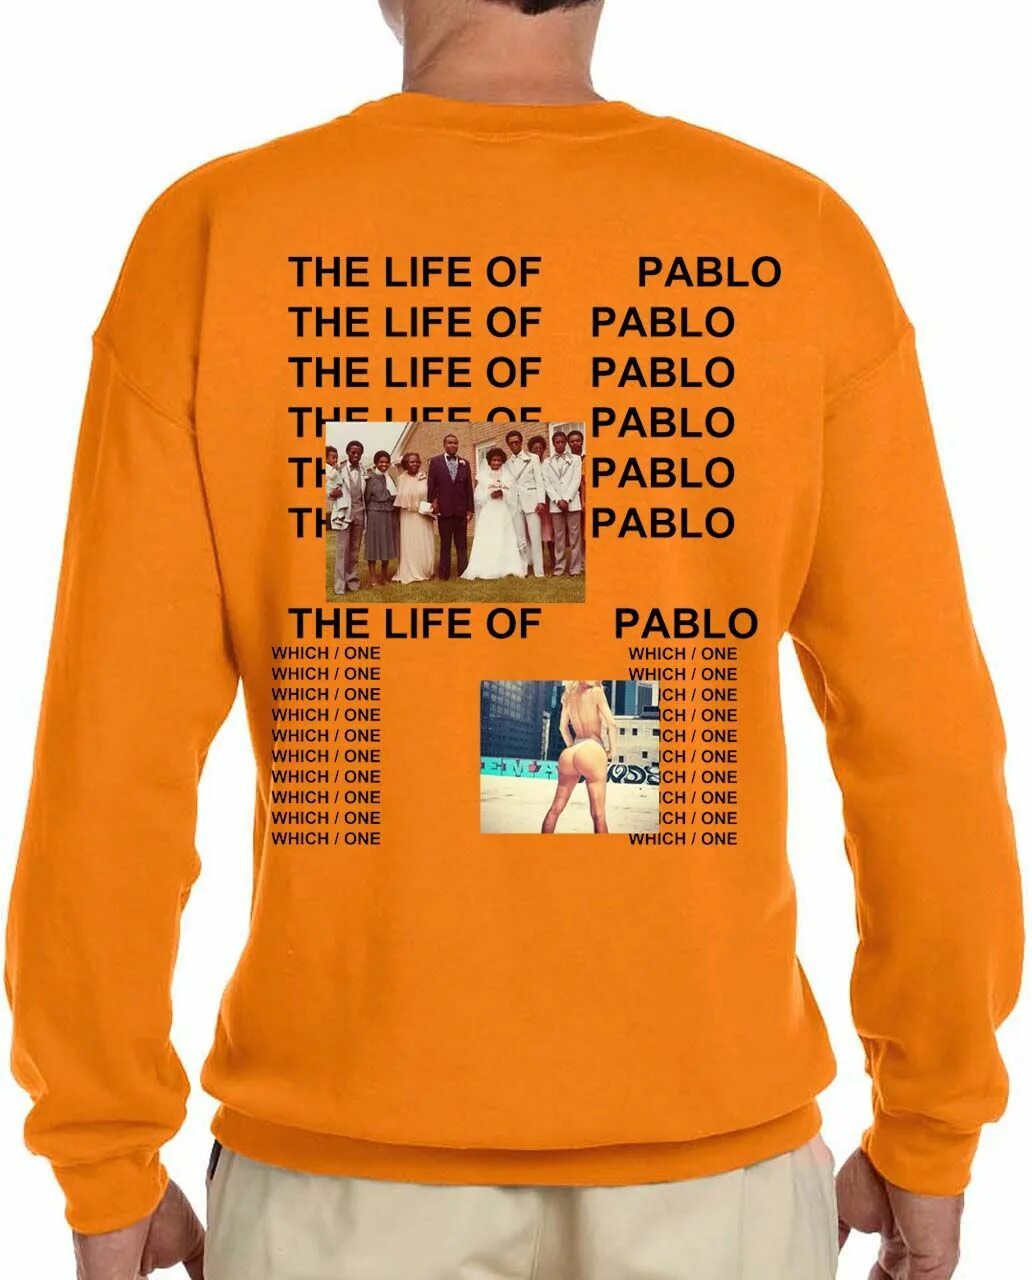 Kanye Life of Pablo. Мерч Pablo Pablo Pablo Pablo. The Life of Pablo мерч. Kanye West the Life of Pablo.